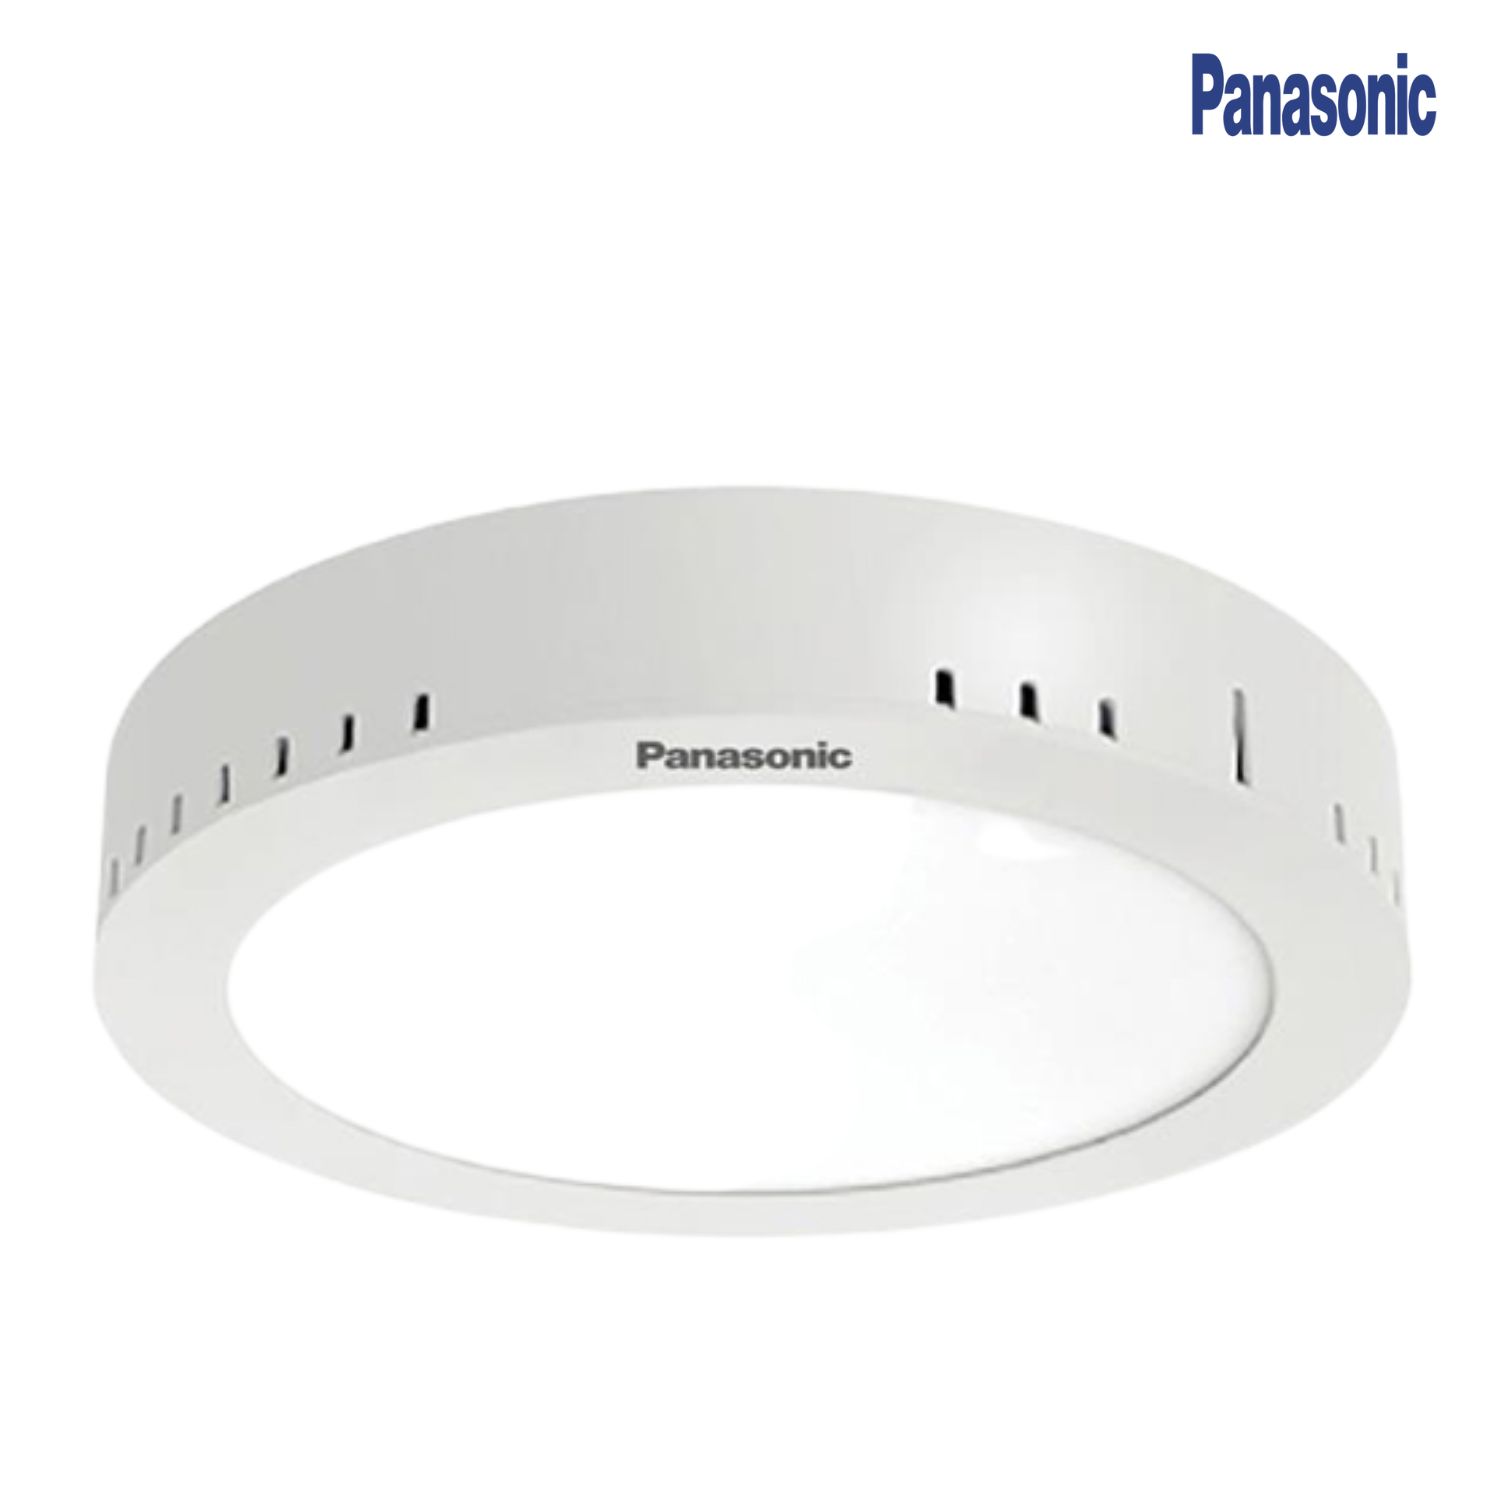 Panasonic - Đèn LED Ốp Trần Nổi Tròn 24W Outbow  | NNNC7622188 / NNNC7623188 / NNNC7627188